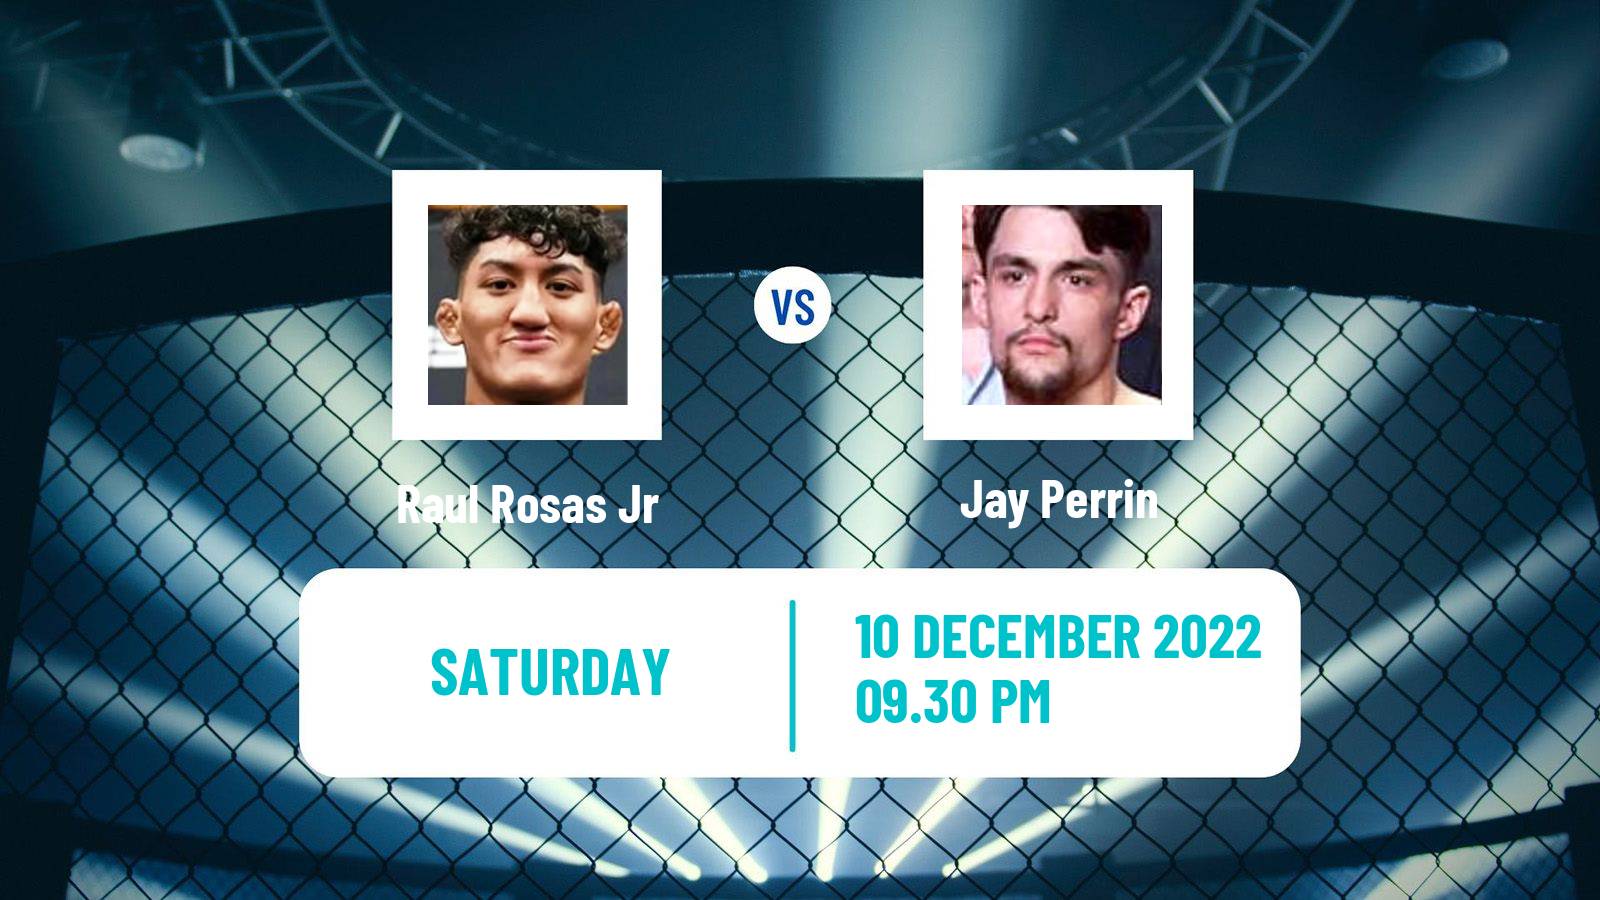 MMA MMA Raul Rosas Jr - Jay Perrin